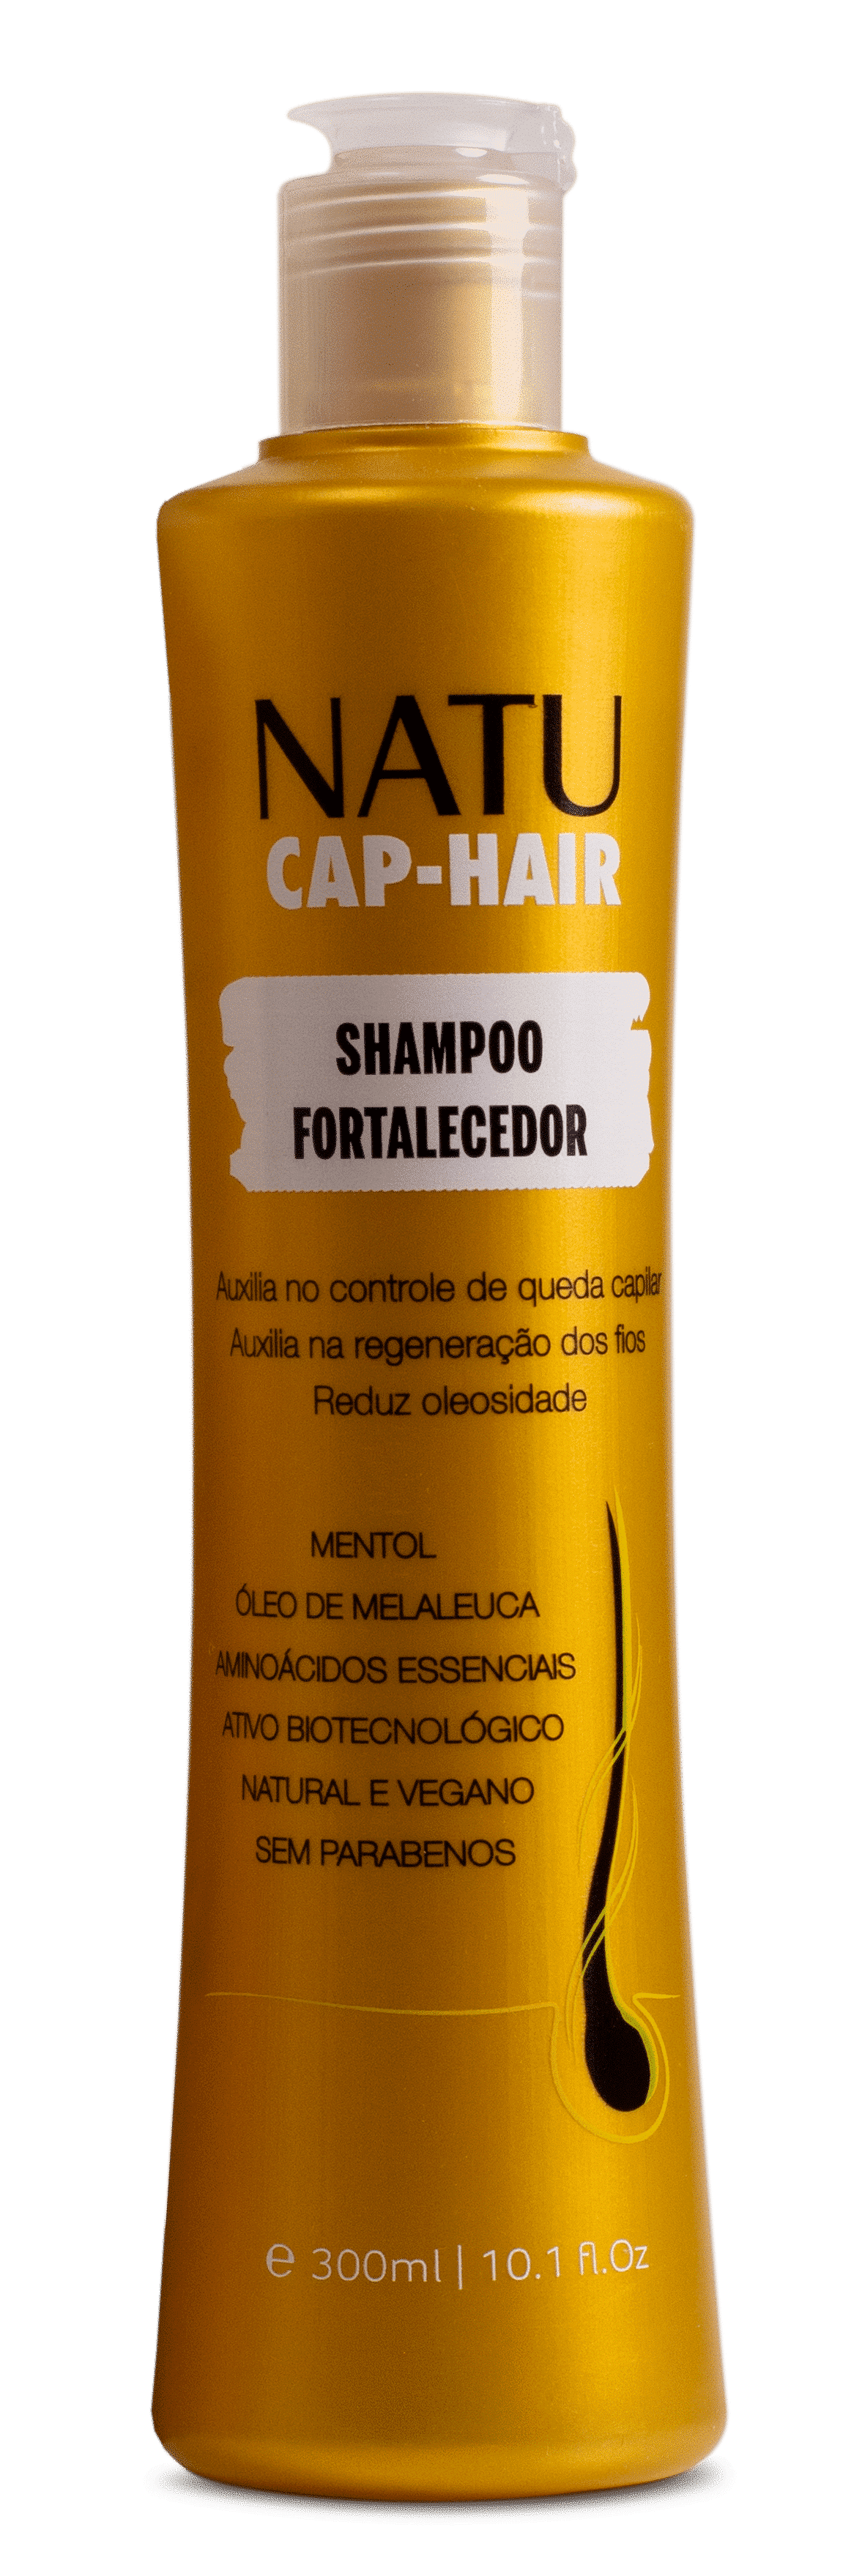 Natumaster Shampoo_Fortalecedor_Frasco